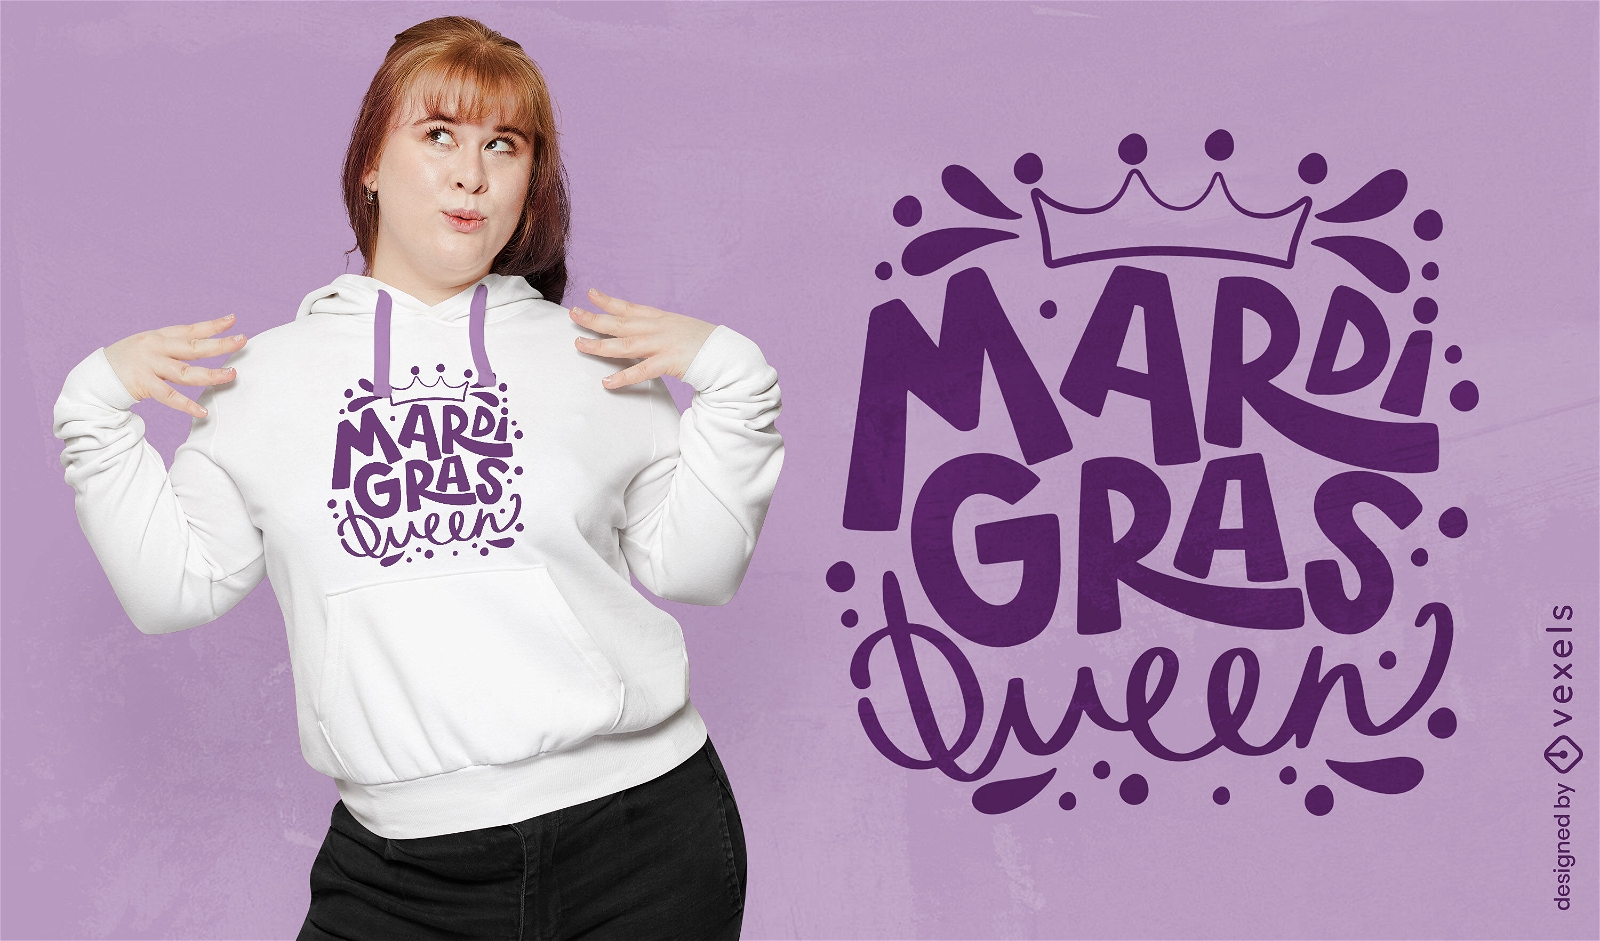 Mardi gras queen lettering t-shirt design